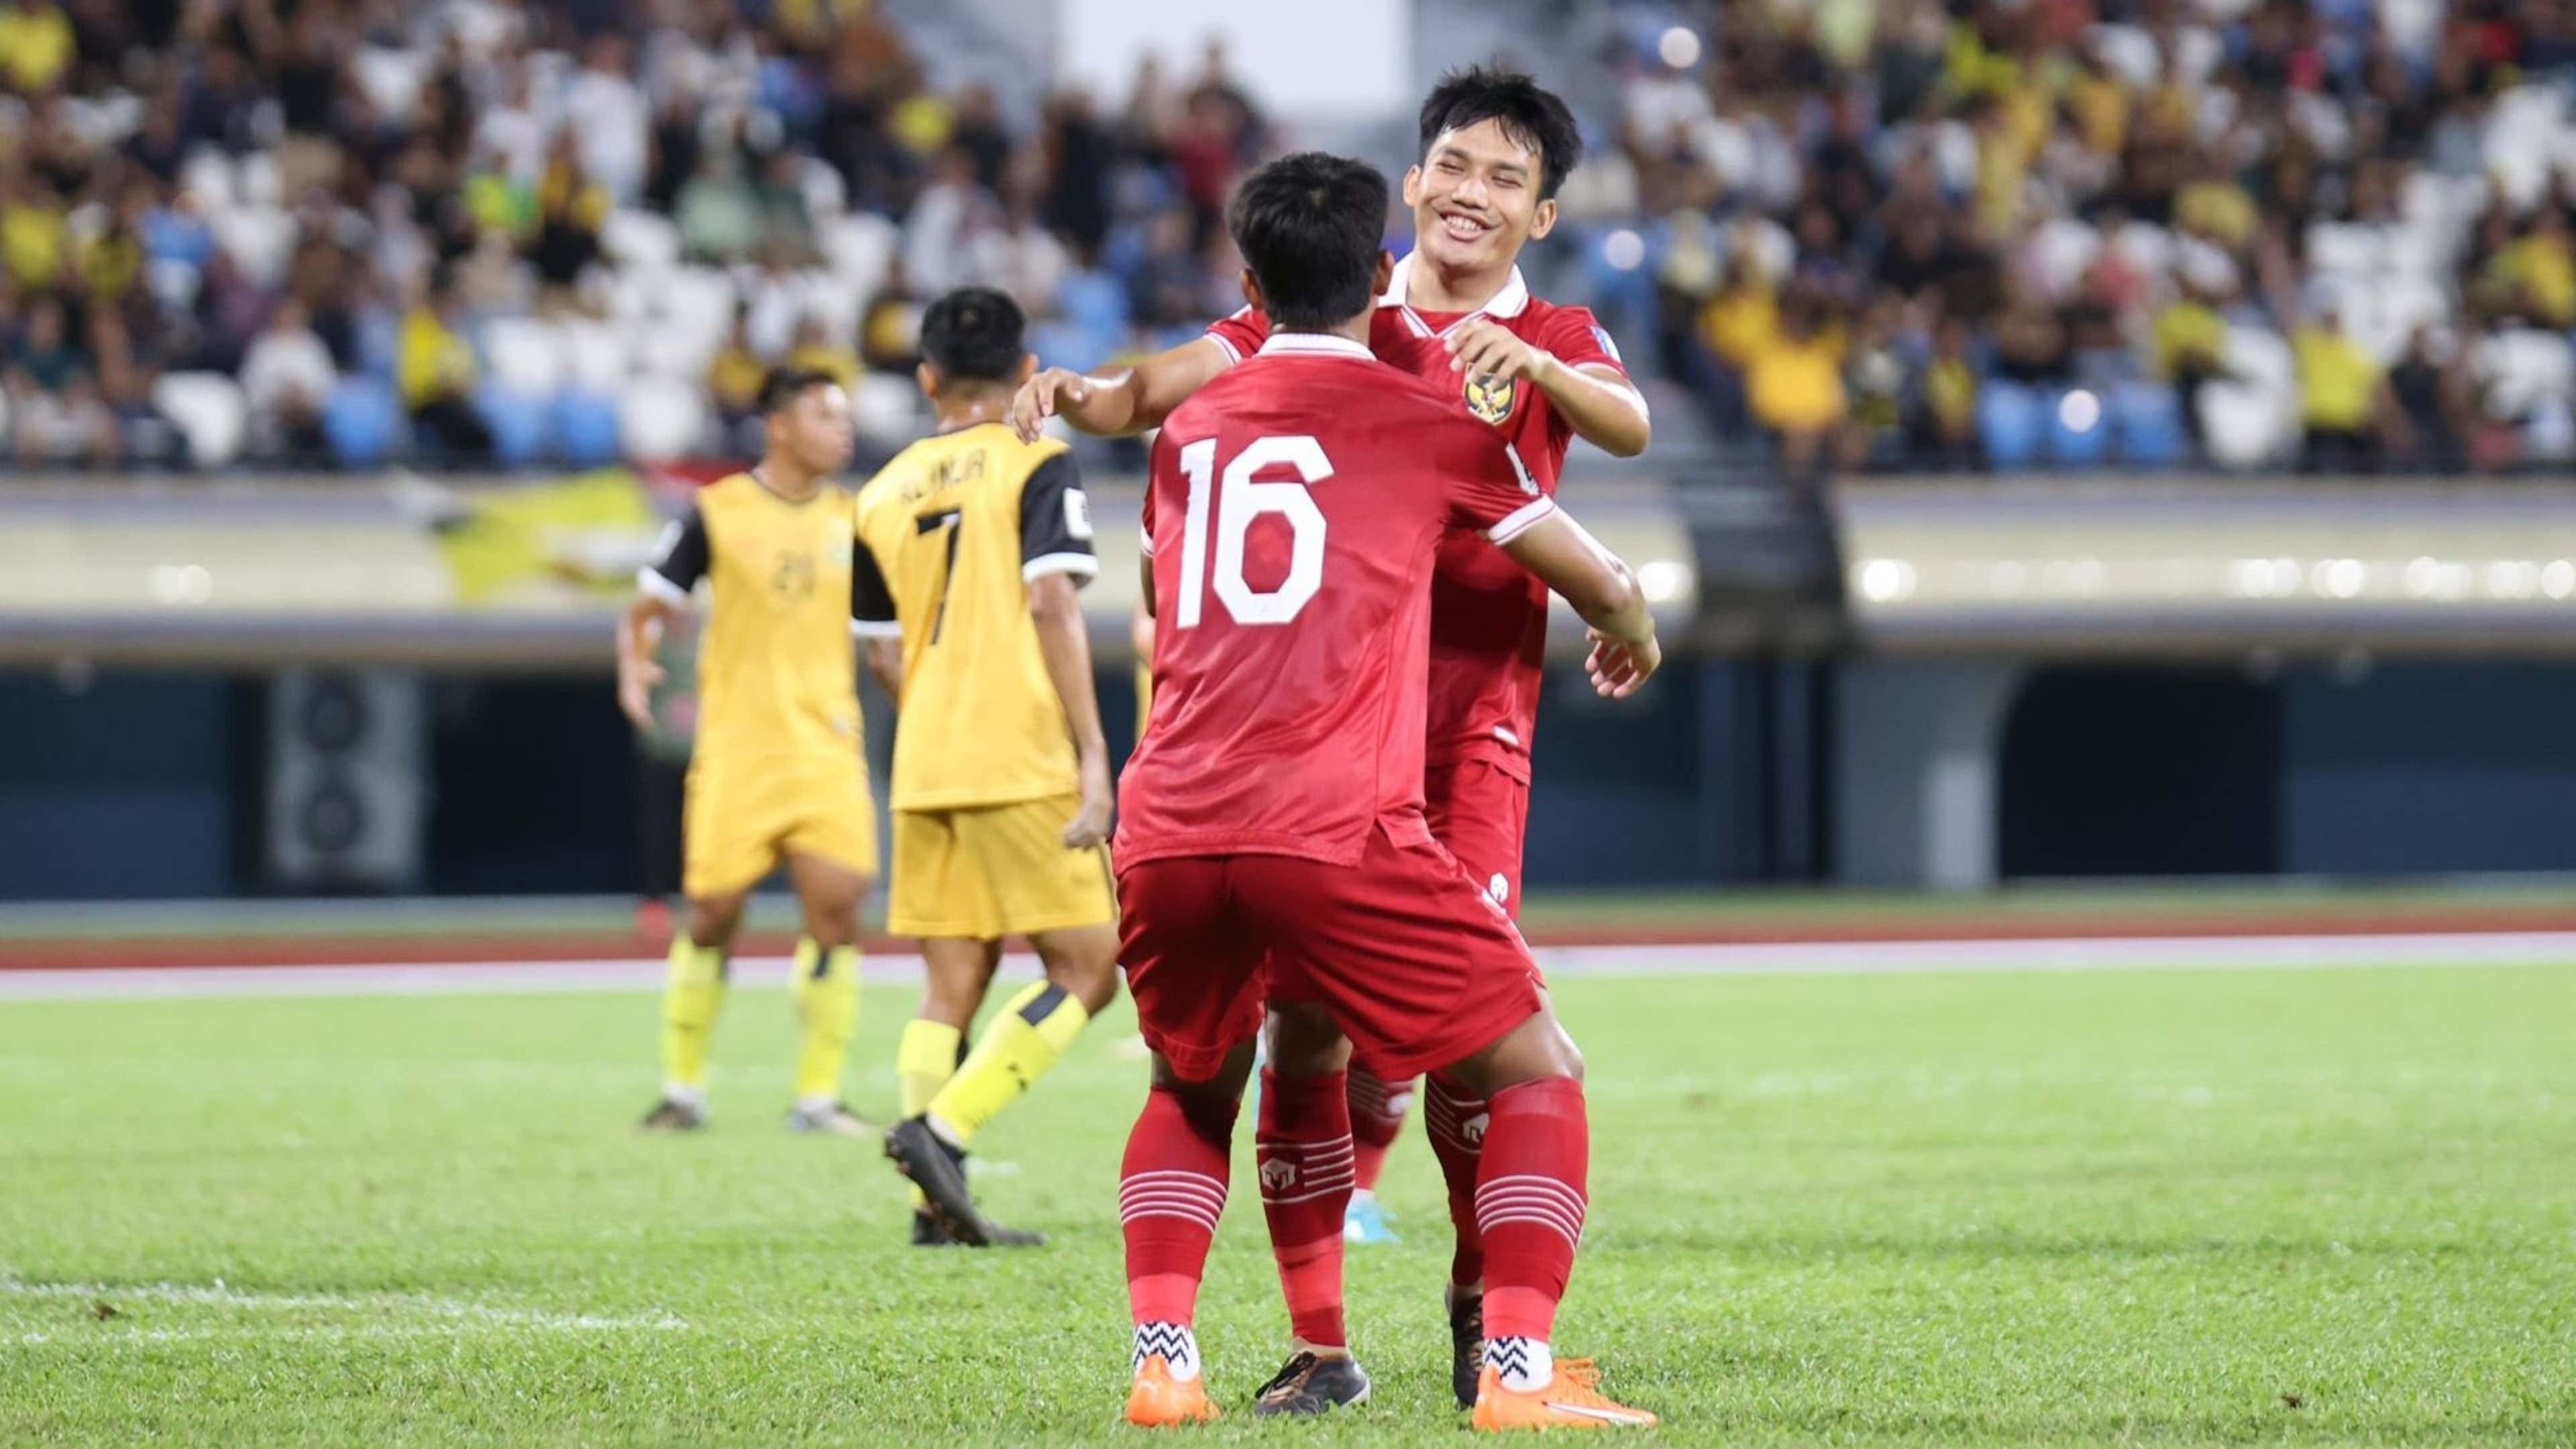 Berita Sepakbola, Live Scores, Hasil & Transfer | Goal.com Indonesia